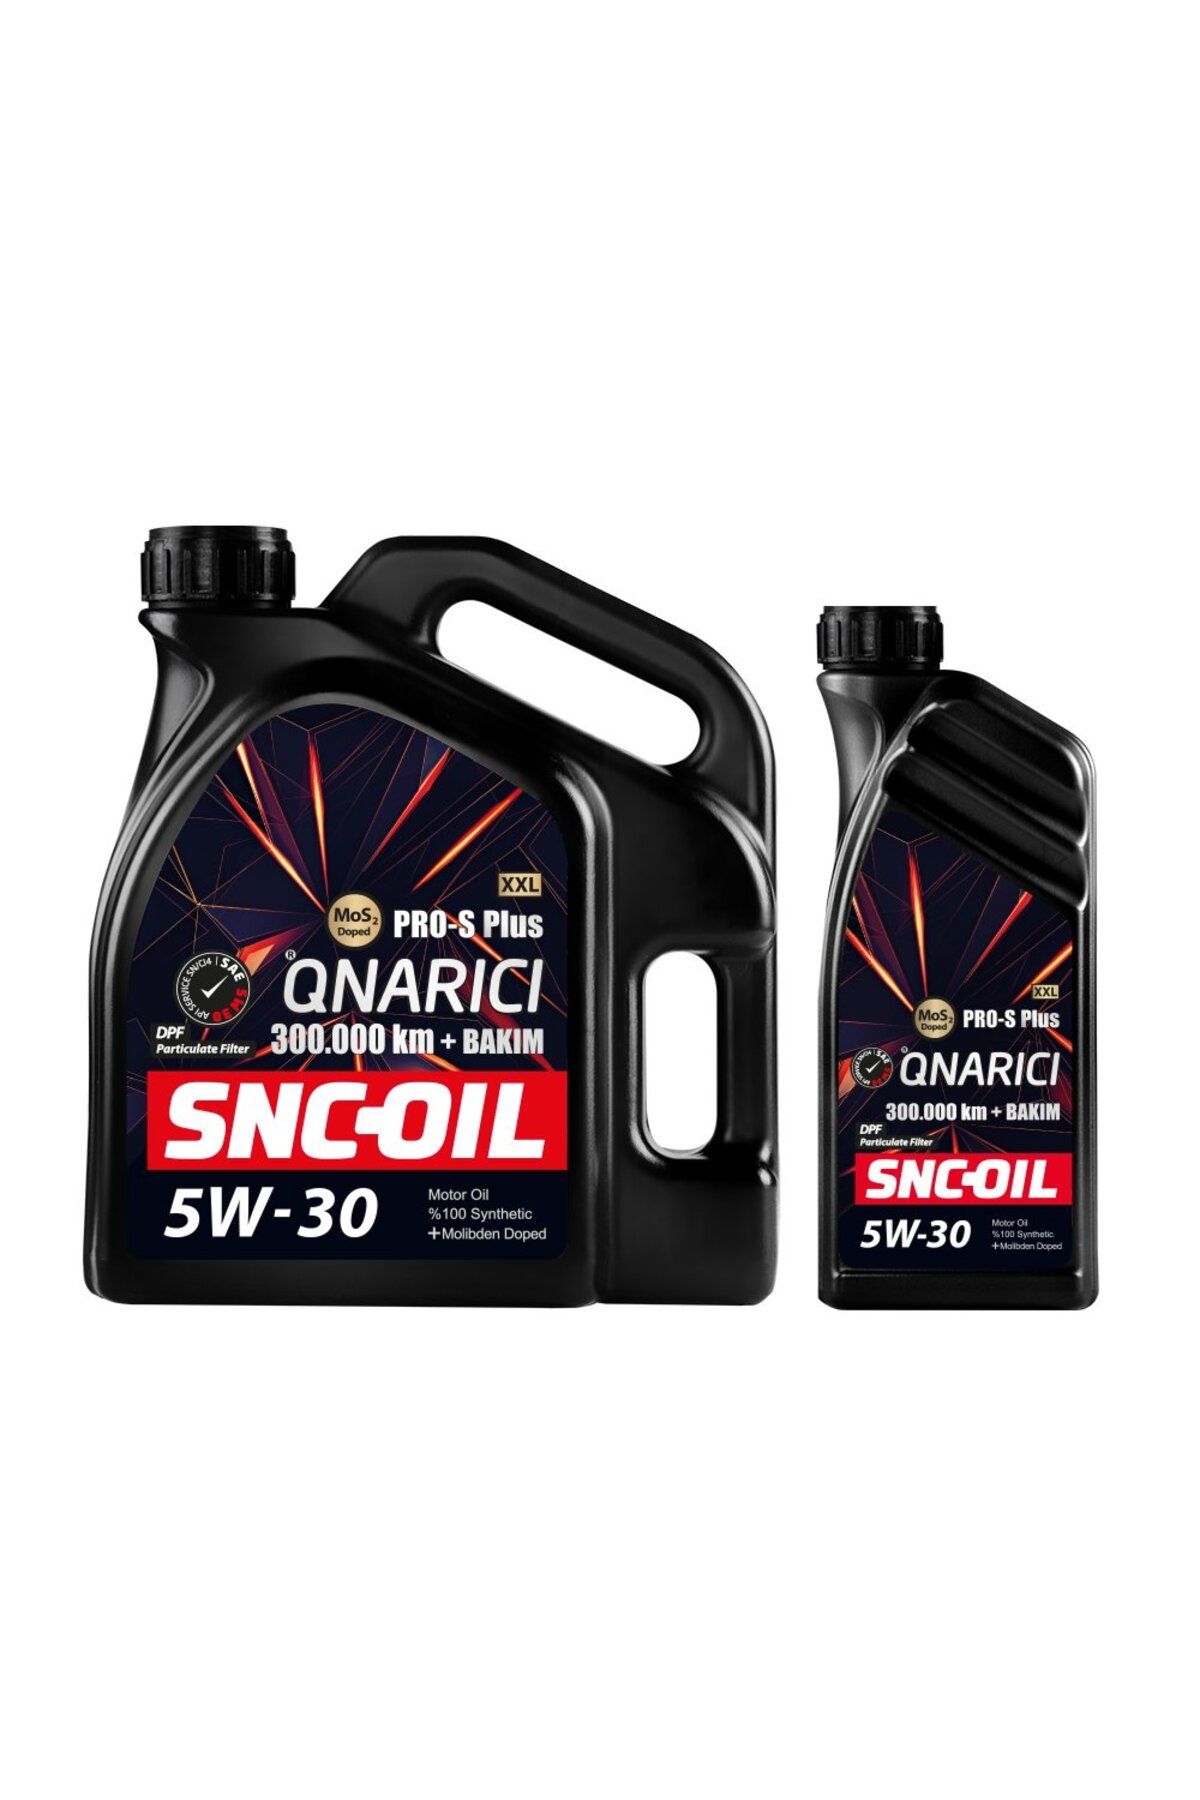 snc Icon Group - SNC-OIL 300.000 Km + Bakım Pro-S Plus XXL Onarıcı 5W-30 Motor Yağı (4+1Litre)